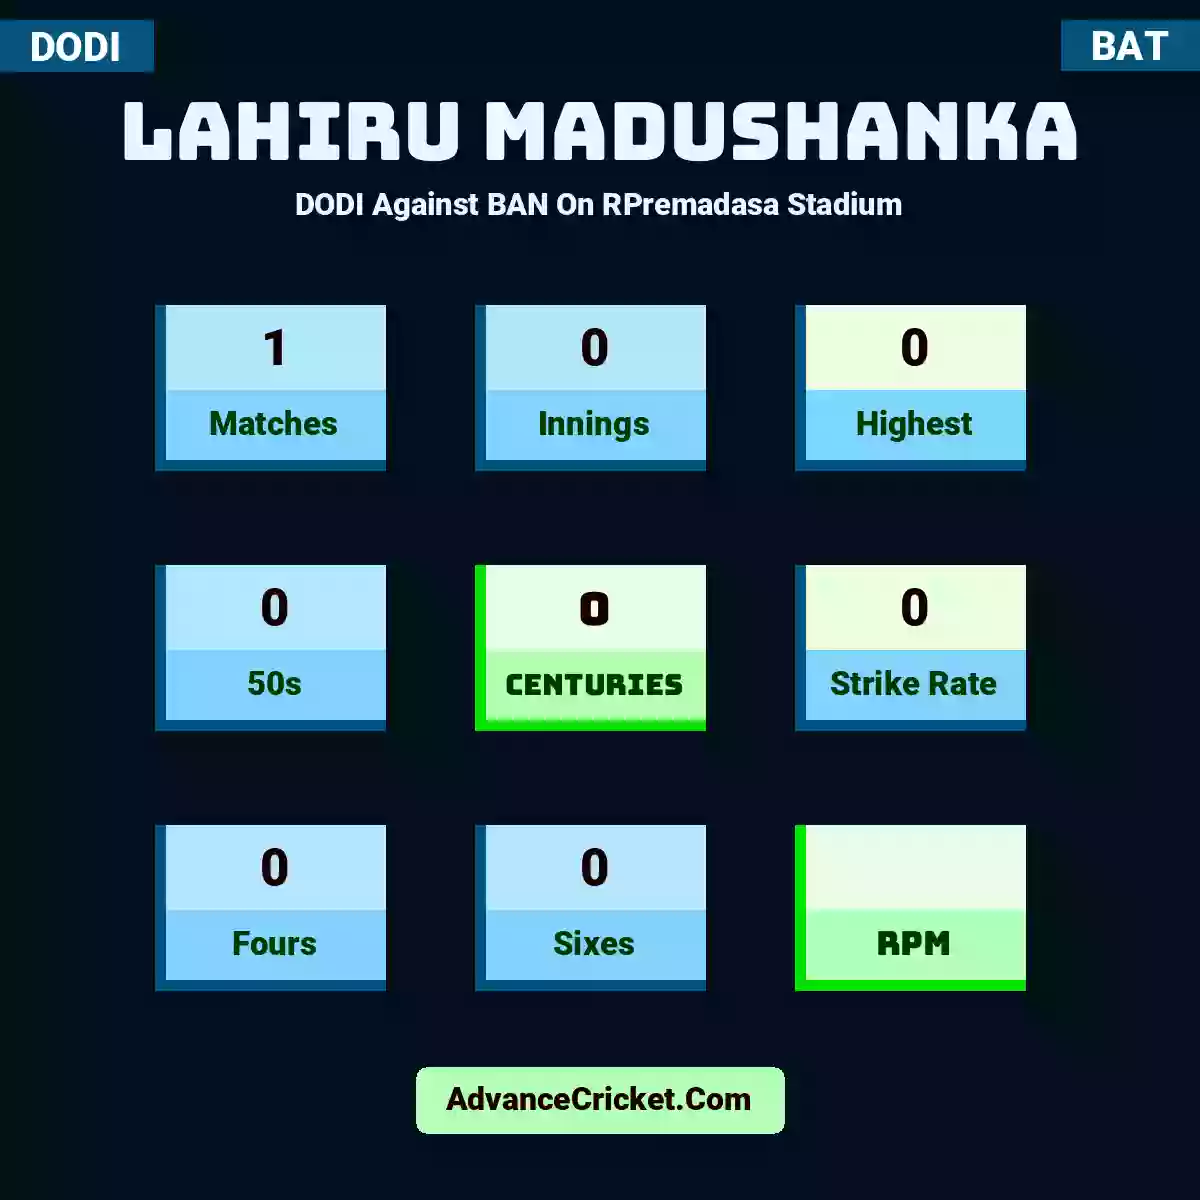 Lahiru Madushanka DODI  Against BAN On RPremadasa Stadium, Lahiru Madushanka played 1 matches, scored 0 runs as highest, 0 half-centuries, and 0 centuries, with a strike rate of 0. L.Madushanka hit 0 fours and 0 sixes.